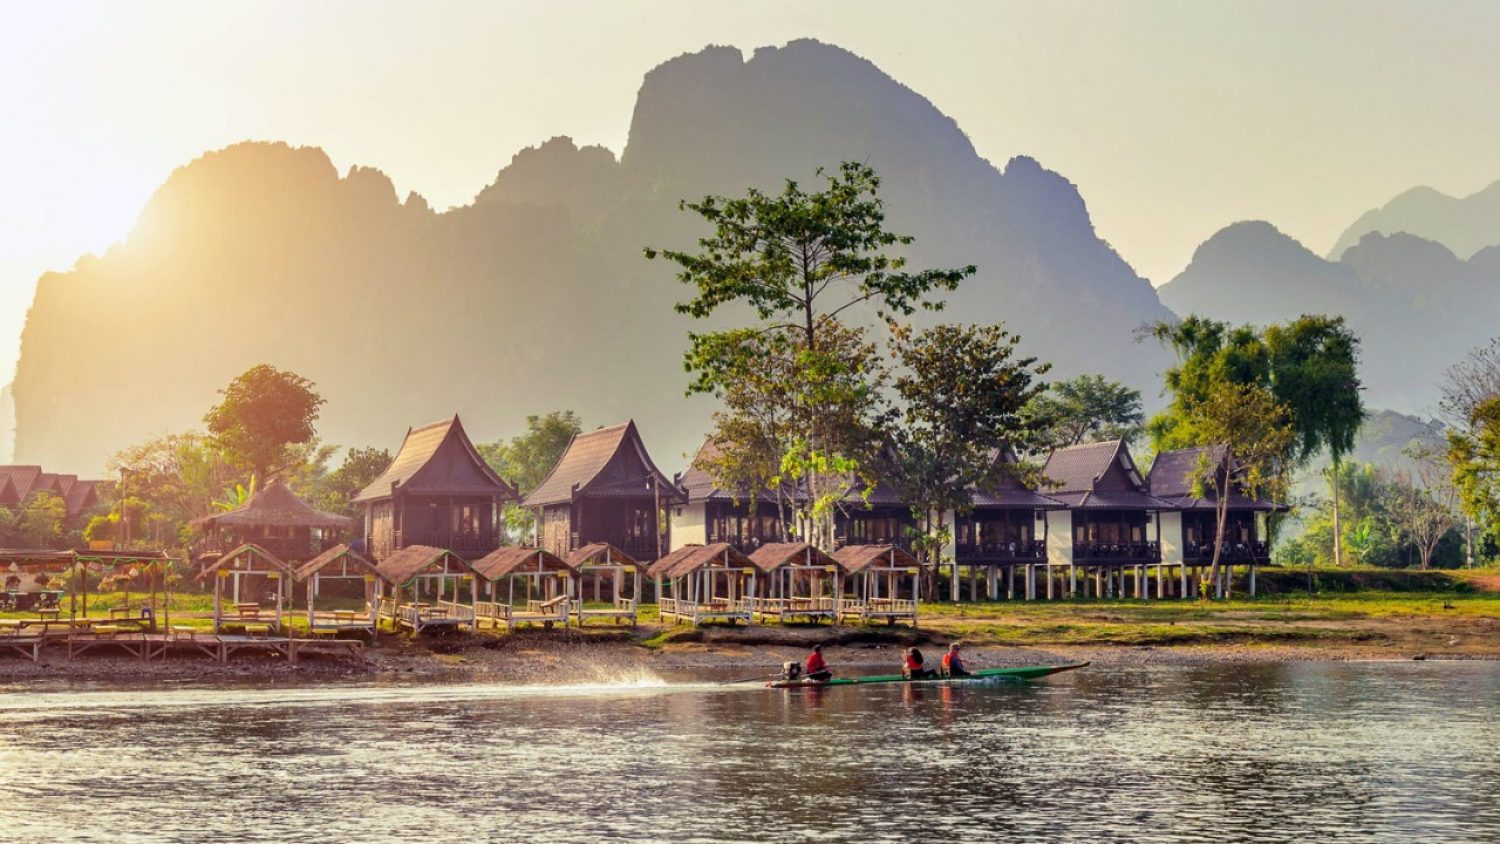 Landscape in Laos